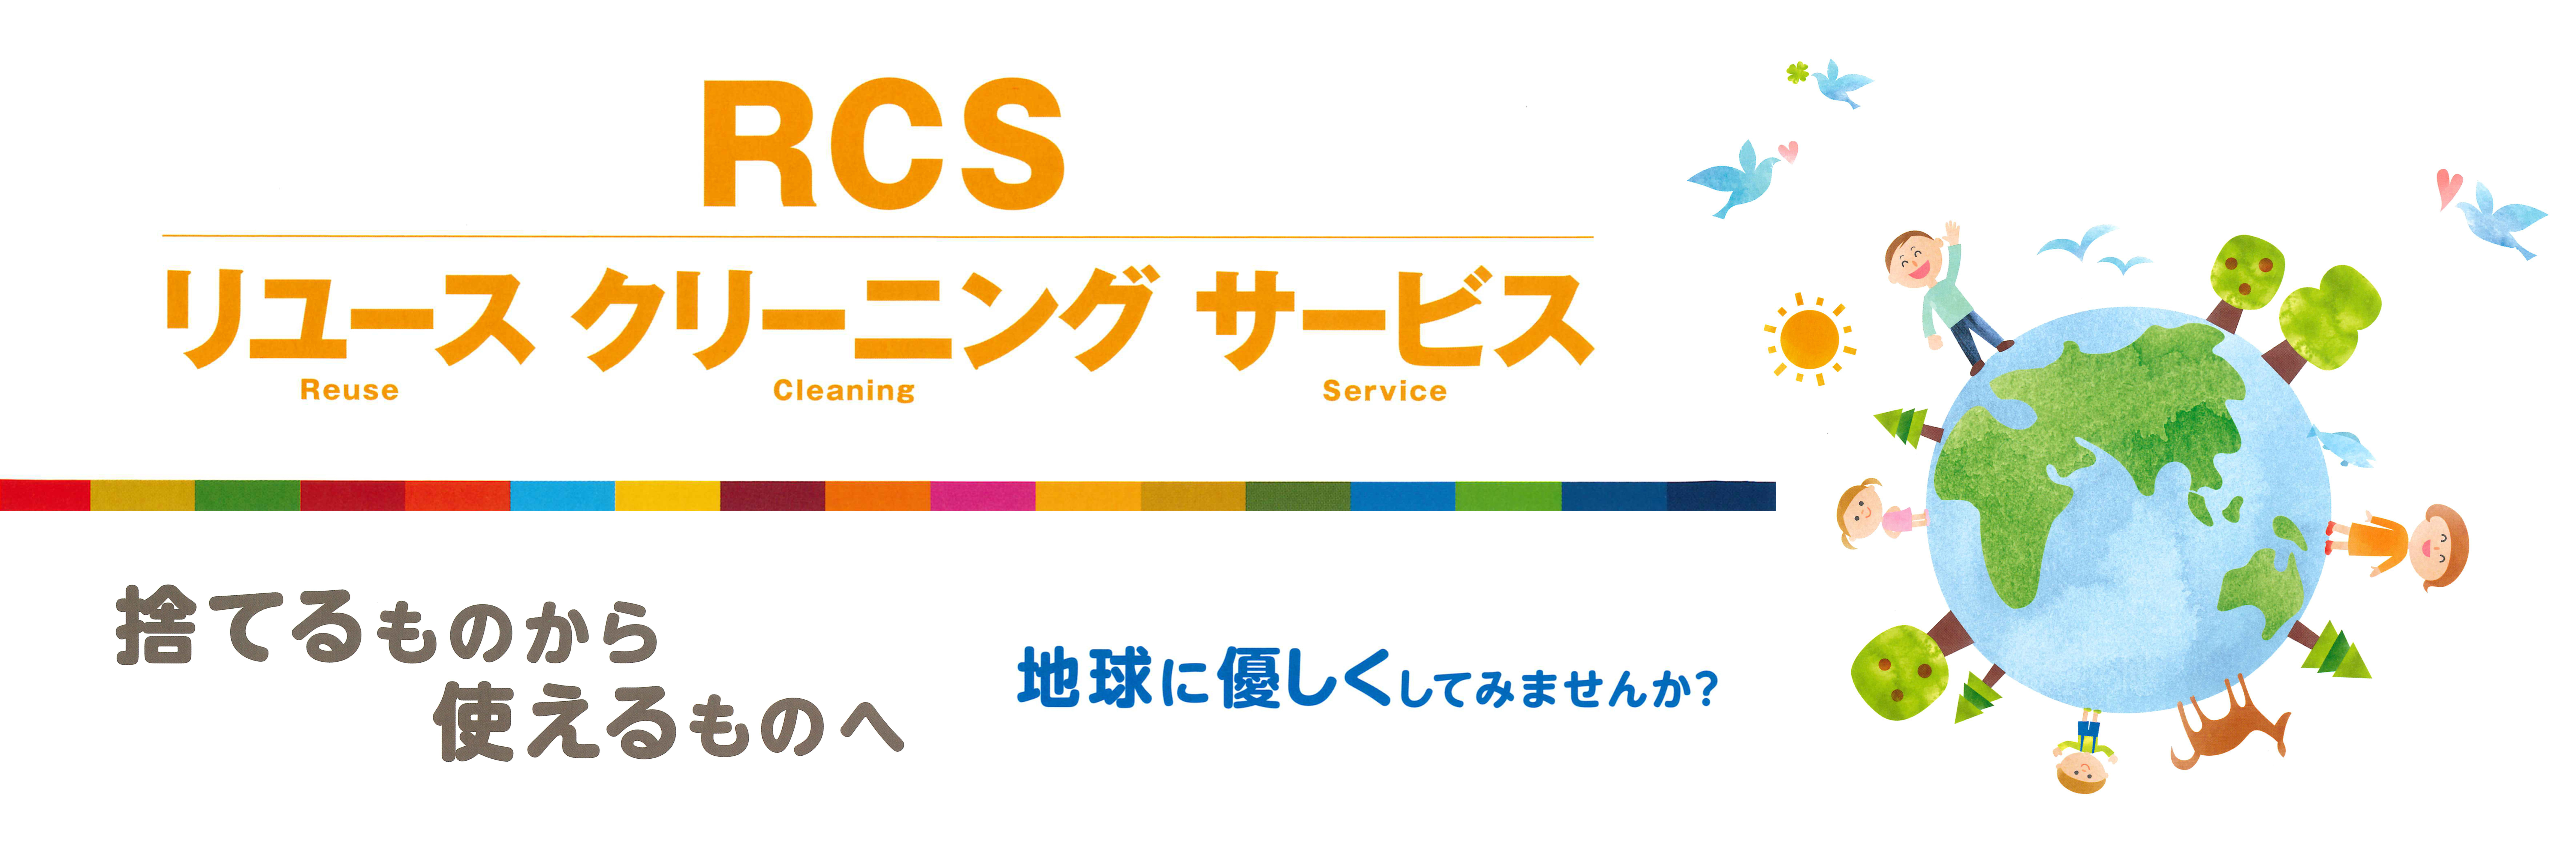 RCSパンフレットロゴ02